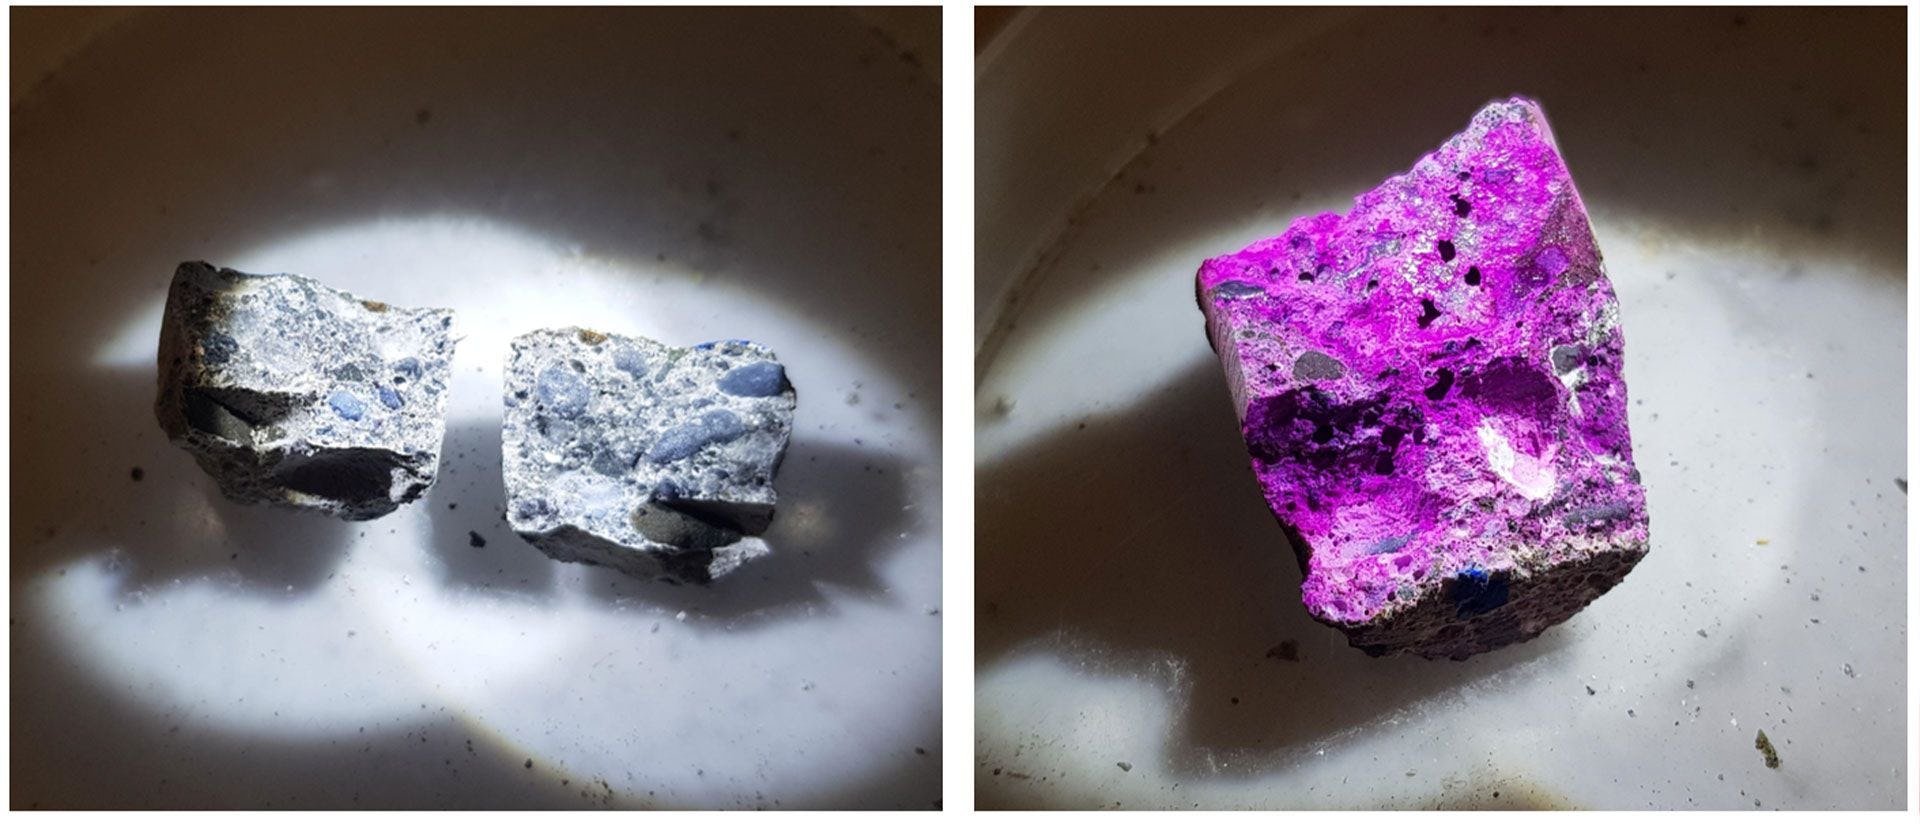 Two samples of rocks under Ultraviolet light revealing different results